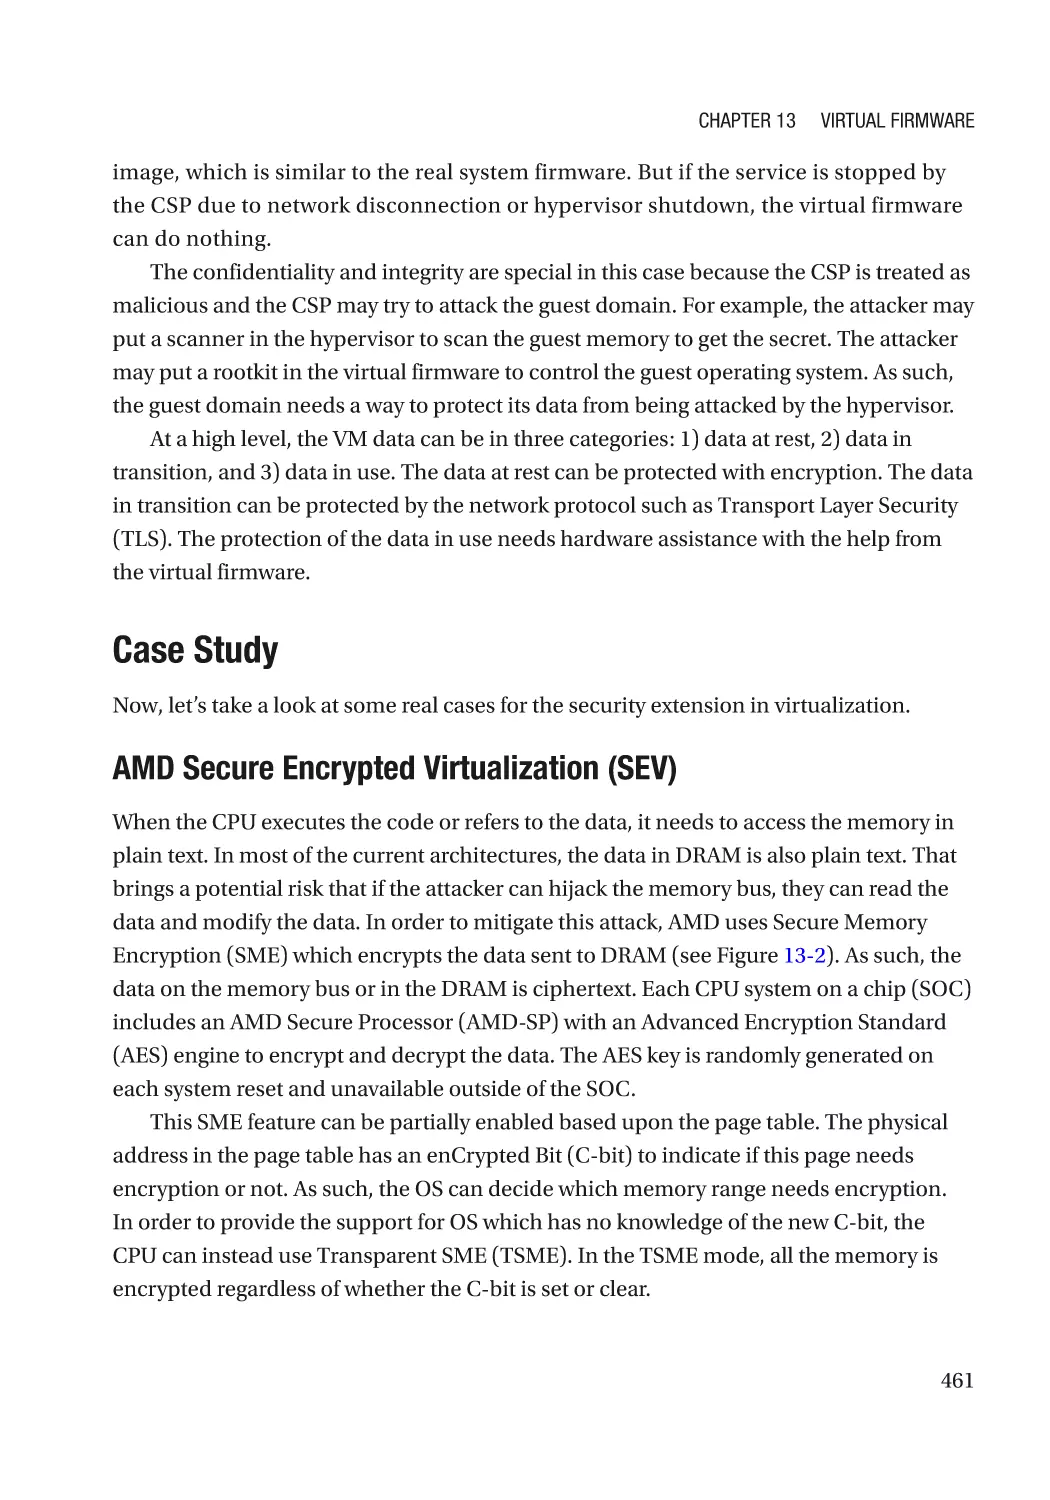 Case Study
AMD Secure Encrypted Virtualization (SEV)